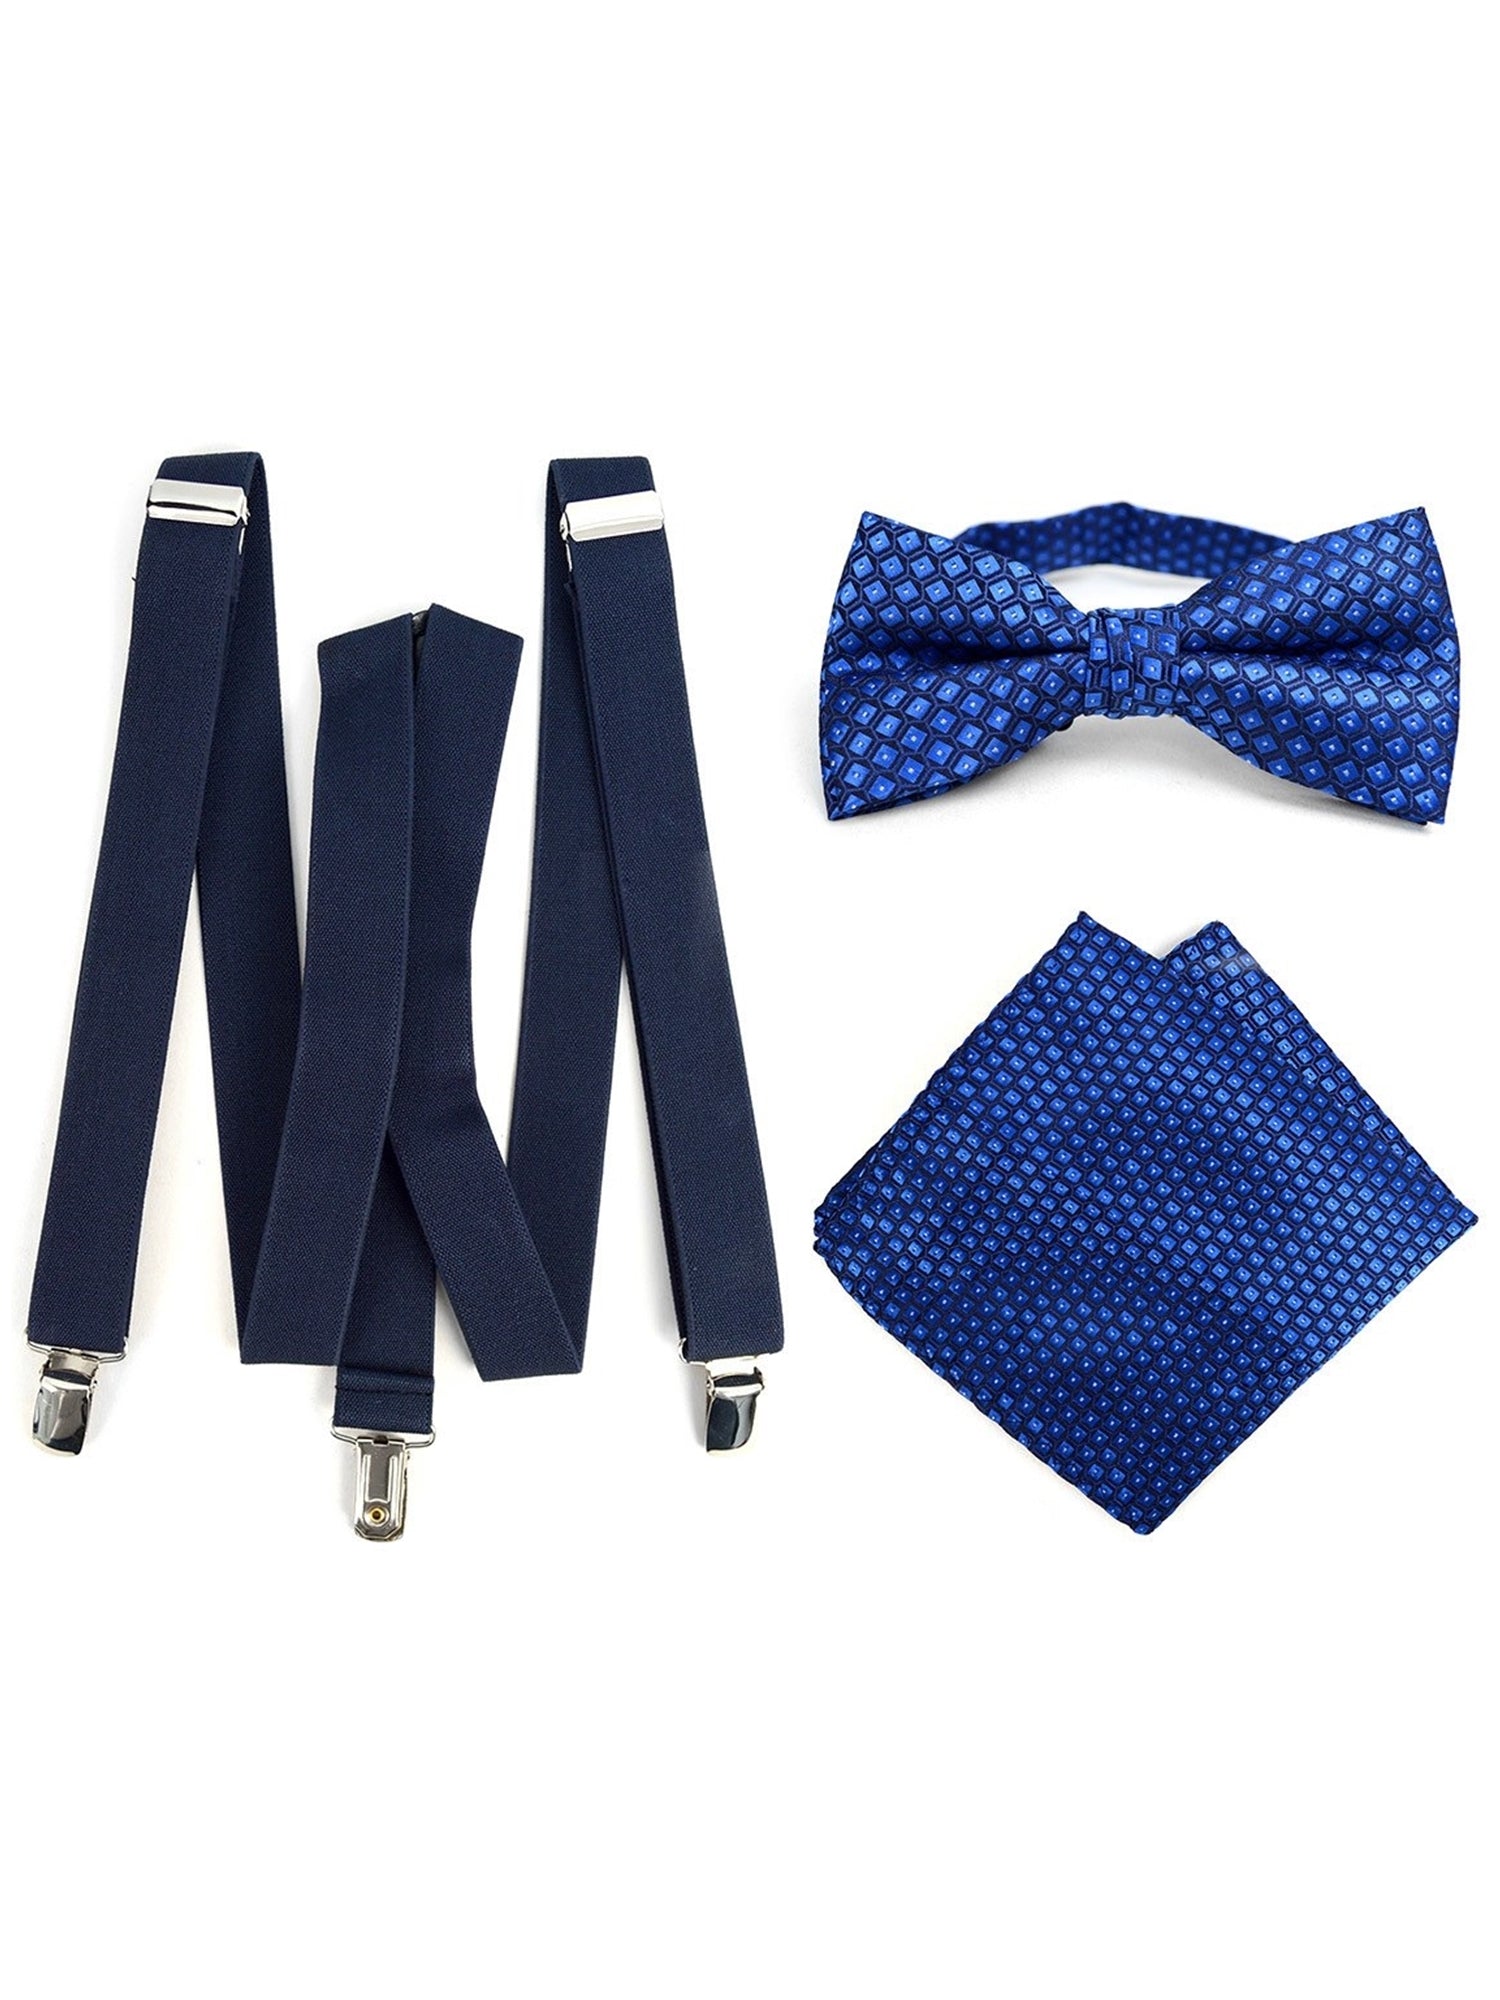 Men's Navy Blue 3 PC Clip-on Suspenders, Bow Tie & Hanky Sets Men's Solid Color Bow Tie TheDapperTie Navy Blue # 4 Regular 